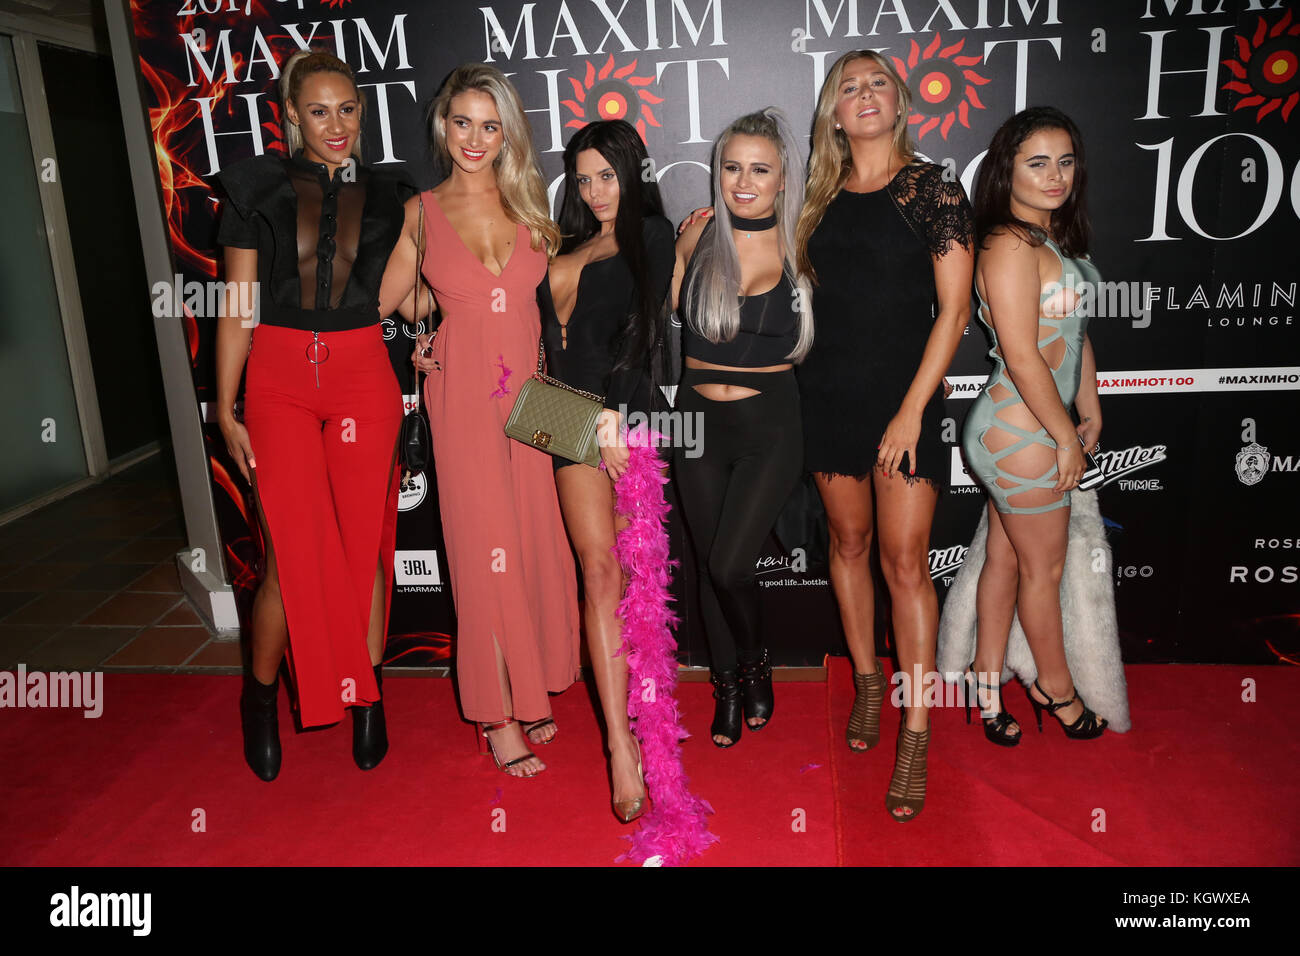 VIPs attend the Maxim Hot 100 Party at Flamingo Lounge, Potts Point, Sydney, Australia. Stock Photo